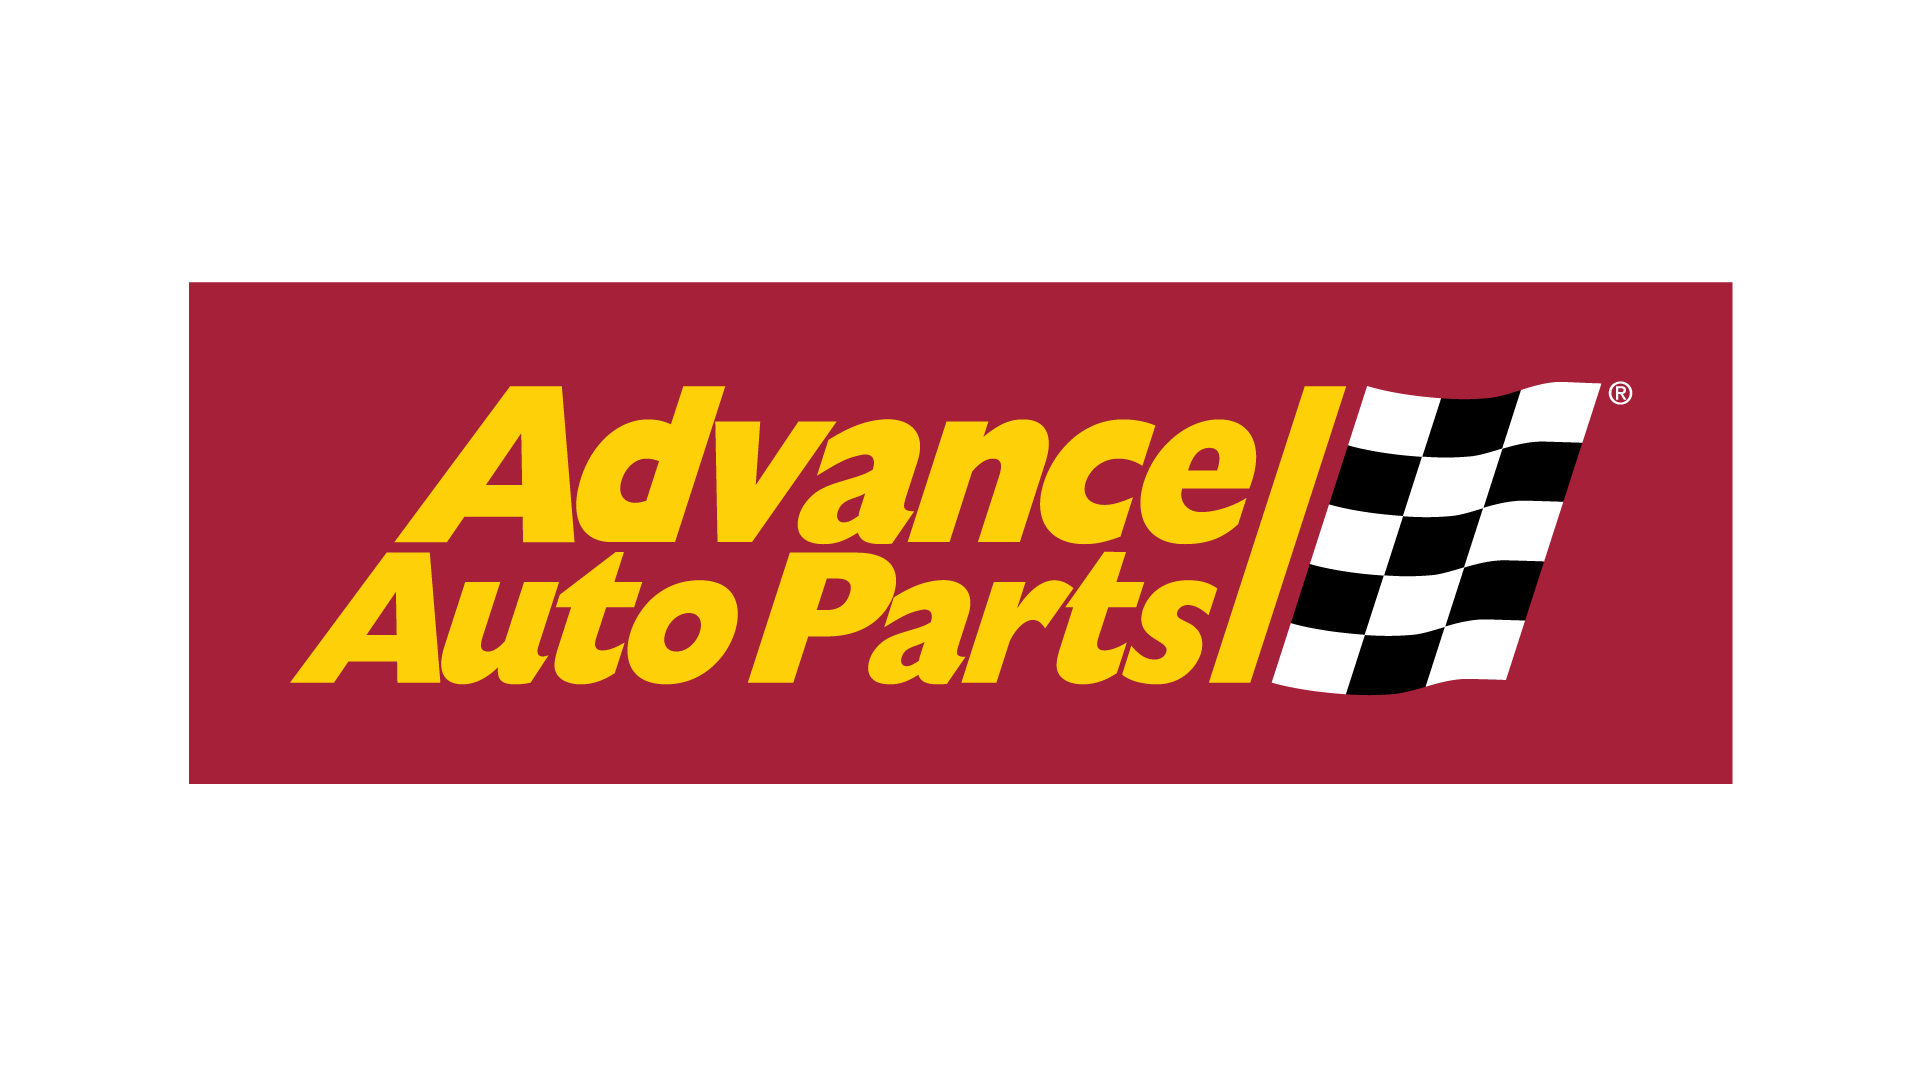 25 Off Advance Auto Parts Coupons Promo Codes Deals 2020 Savings